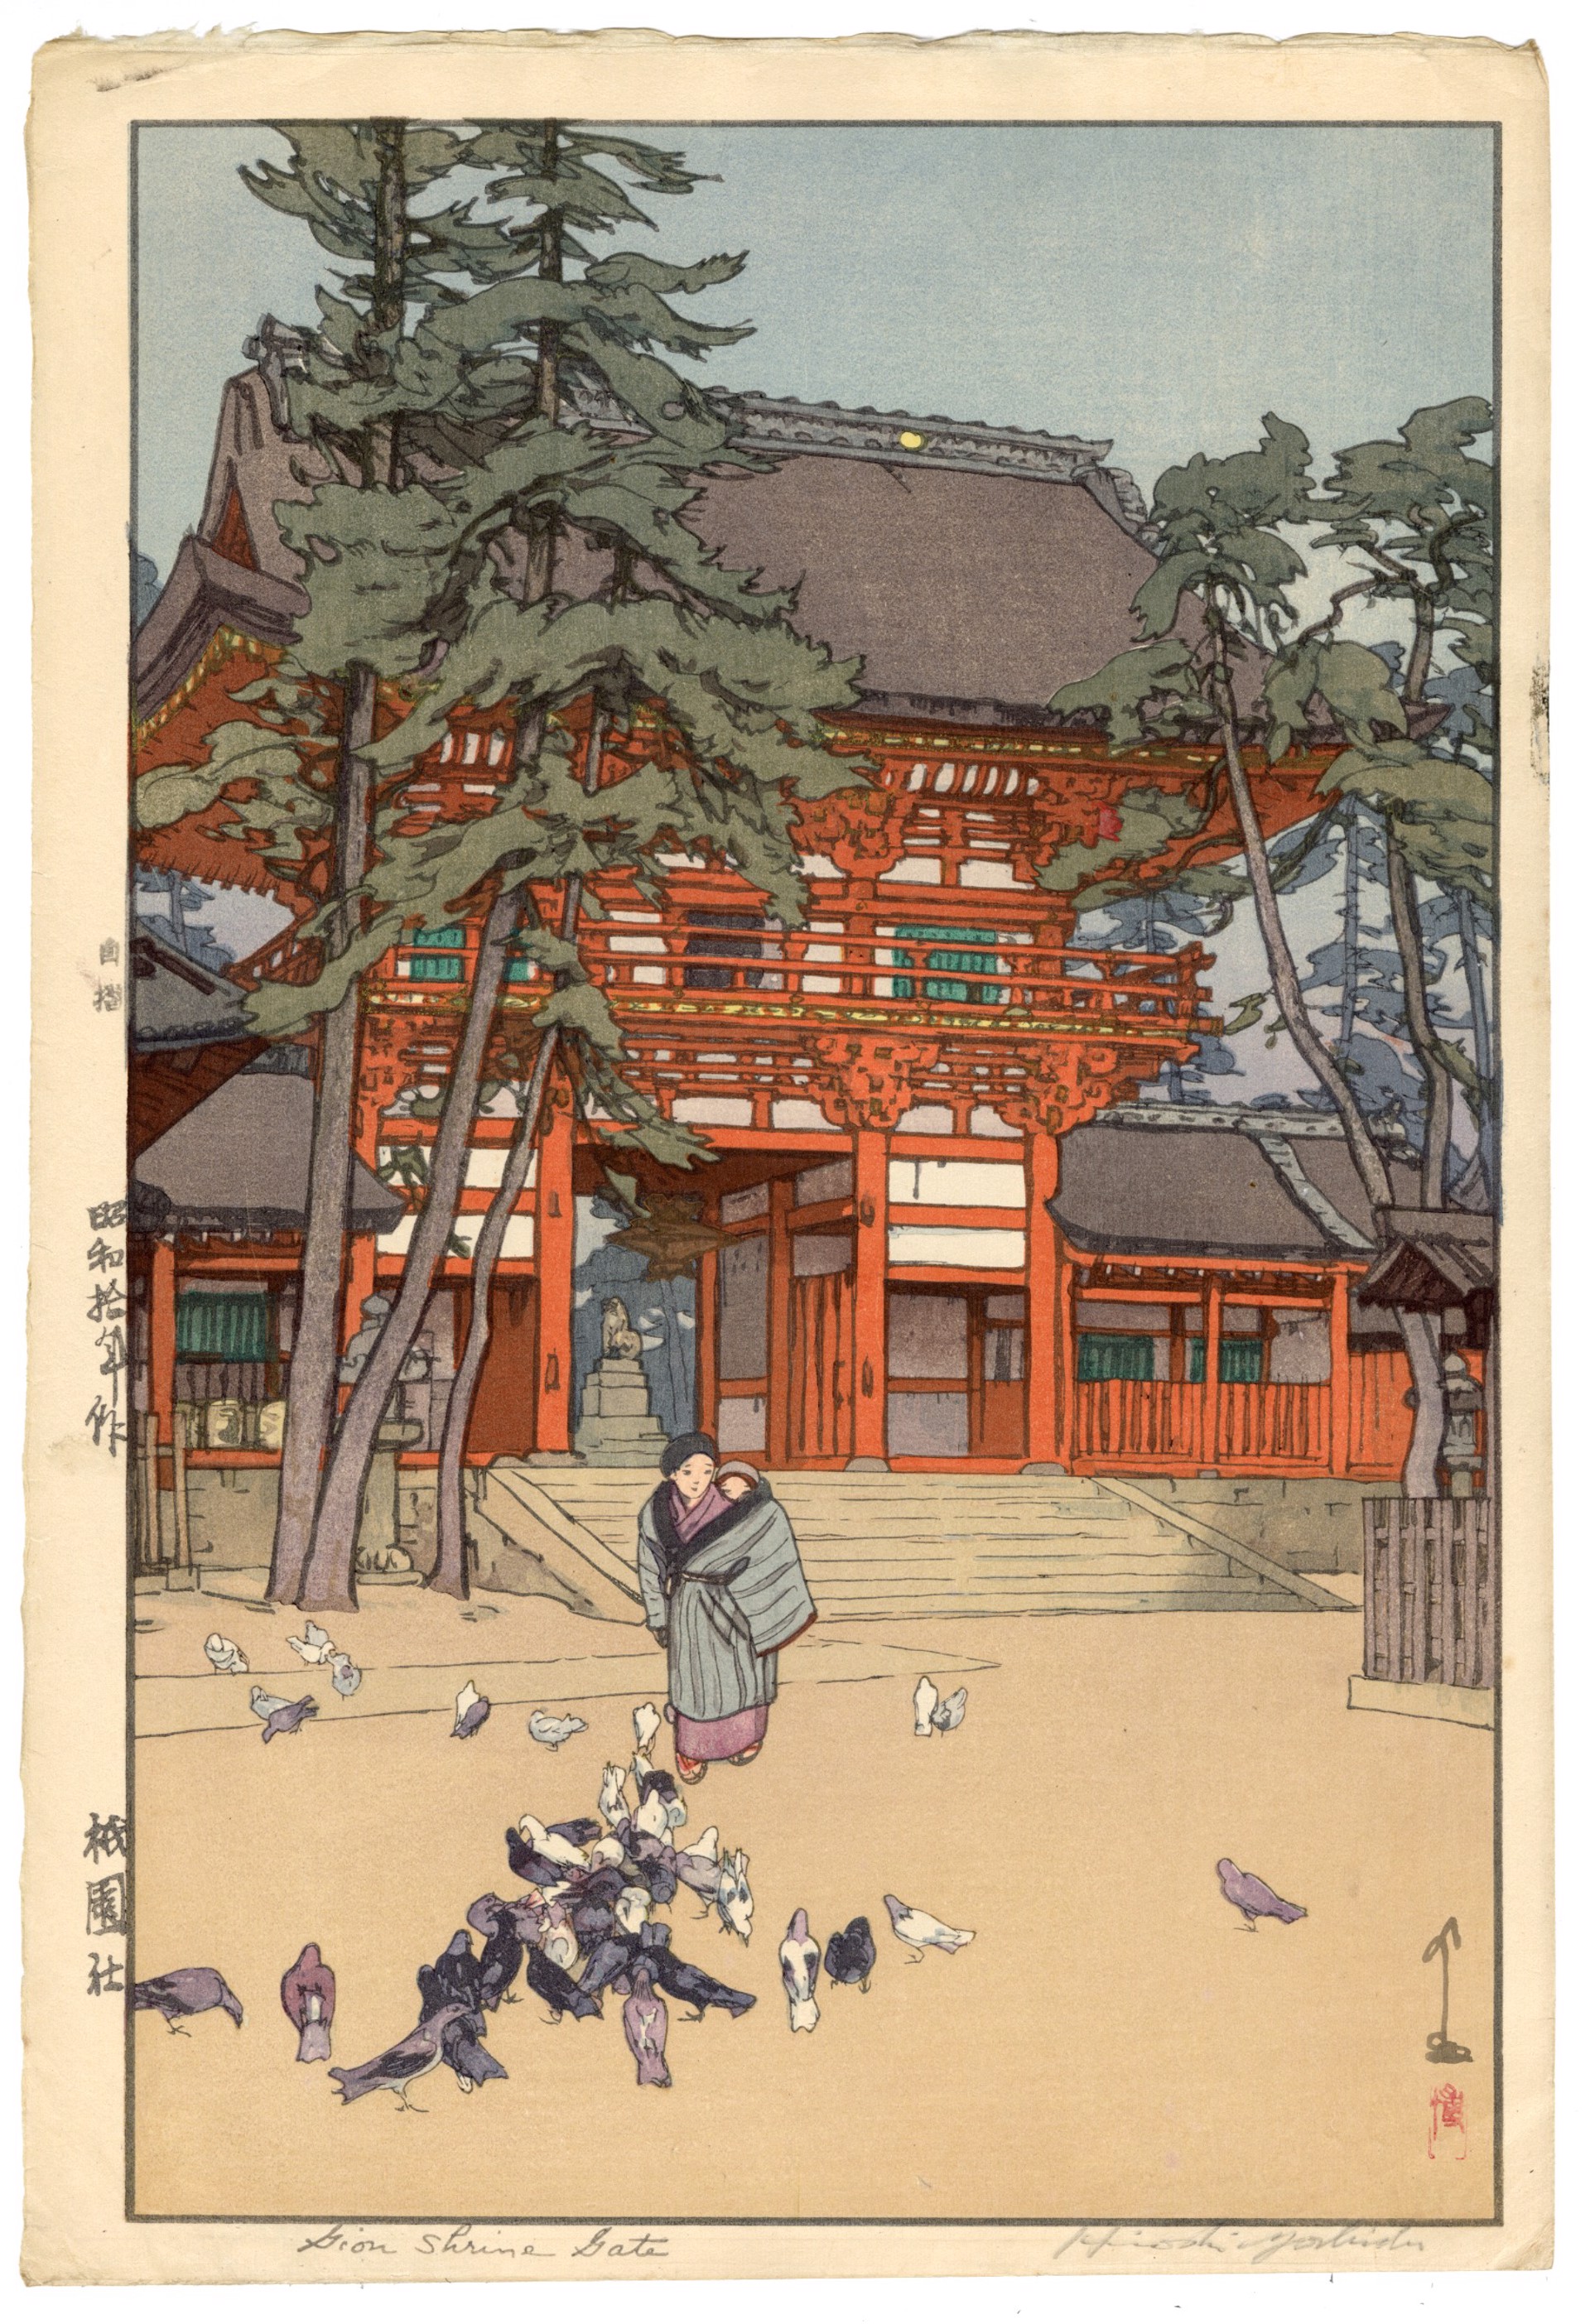 Gion Shrine Gate by Hiroshi Yoshida